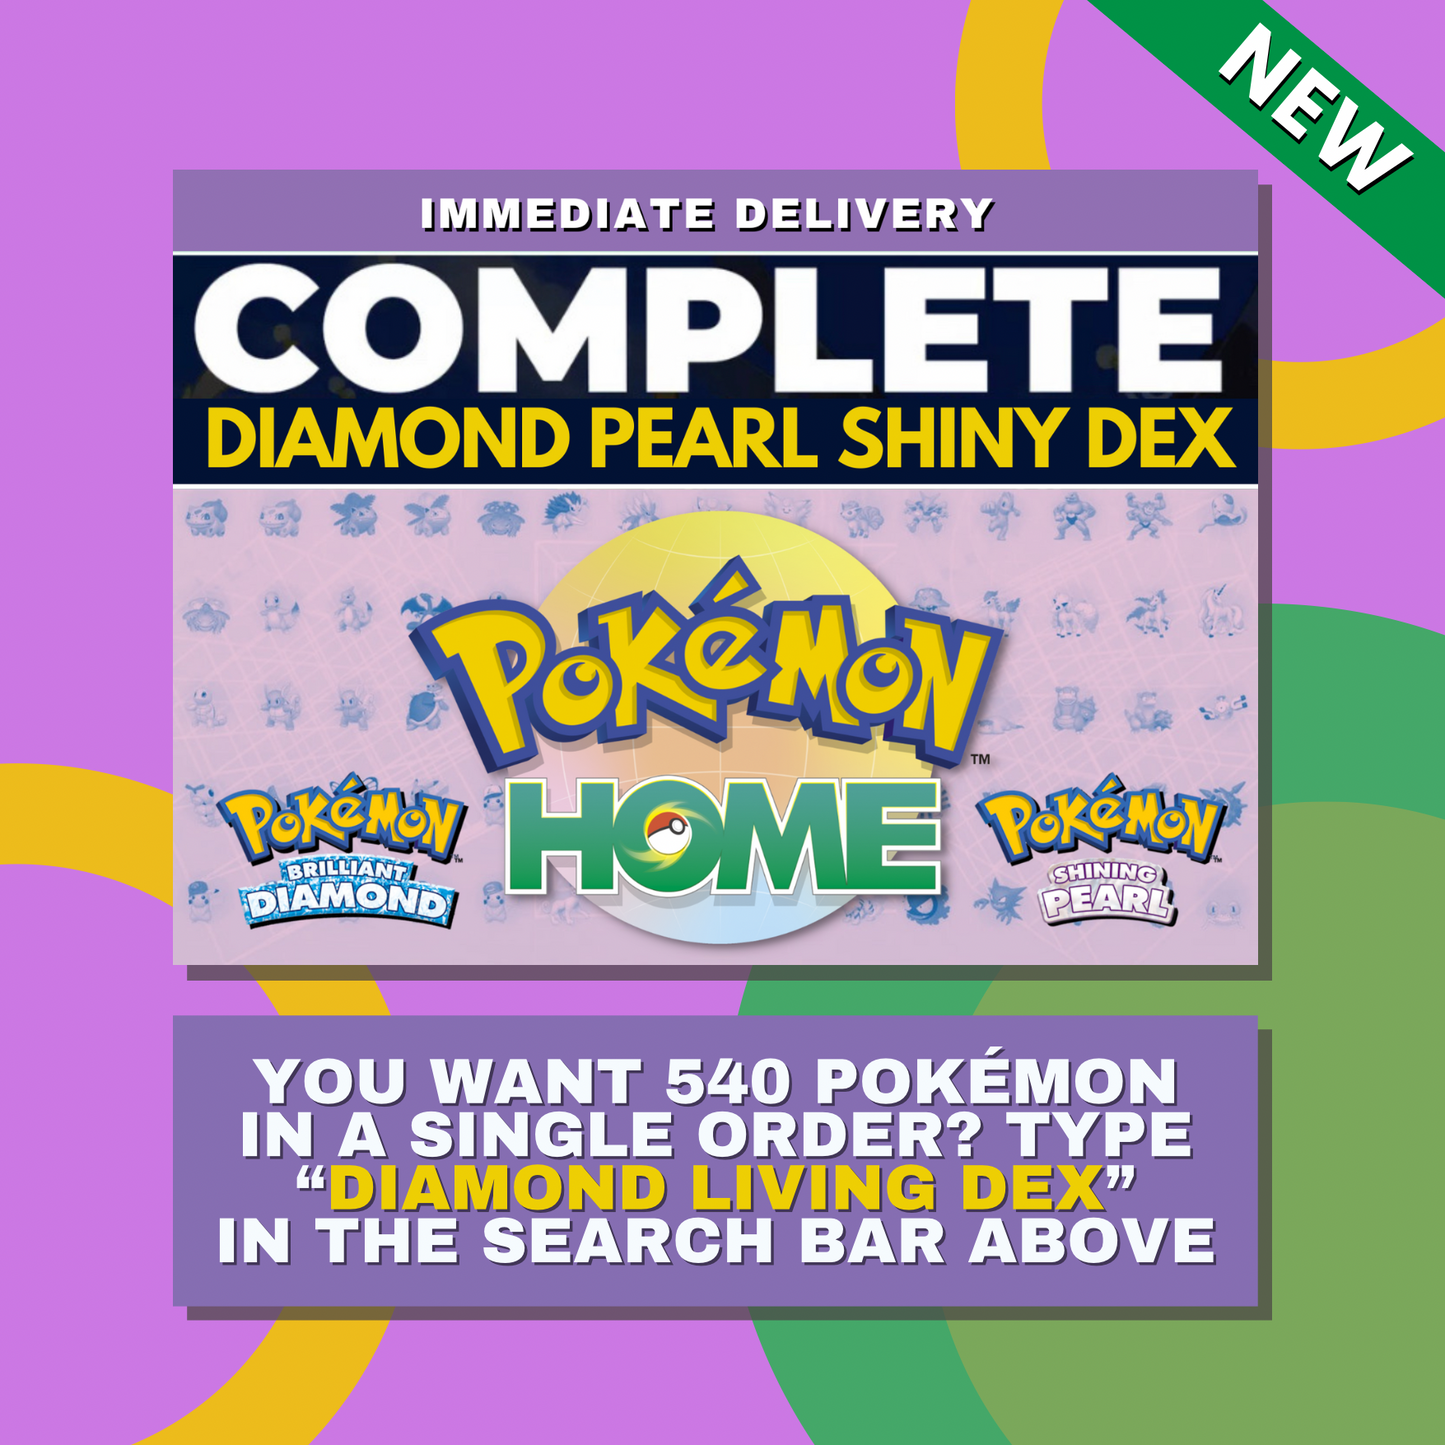 Ninetales  Shiny ✨ or Non Shiny Pokémon Brilliant Diamond Shining Pearl Battle Ready 6 IV Competitive 100%  Legit Level 100 Customizable Custom OT